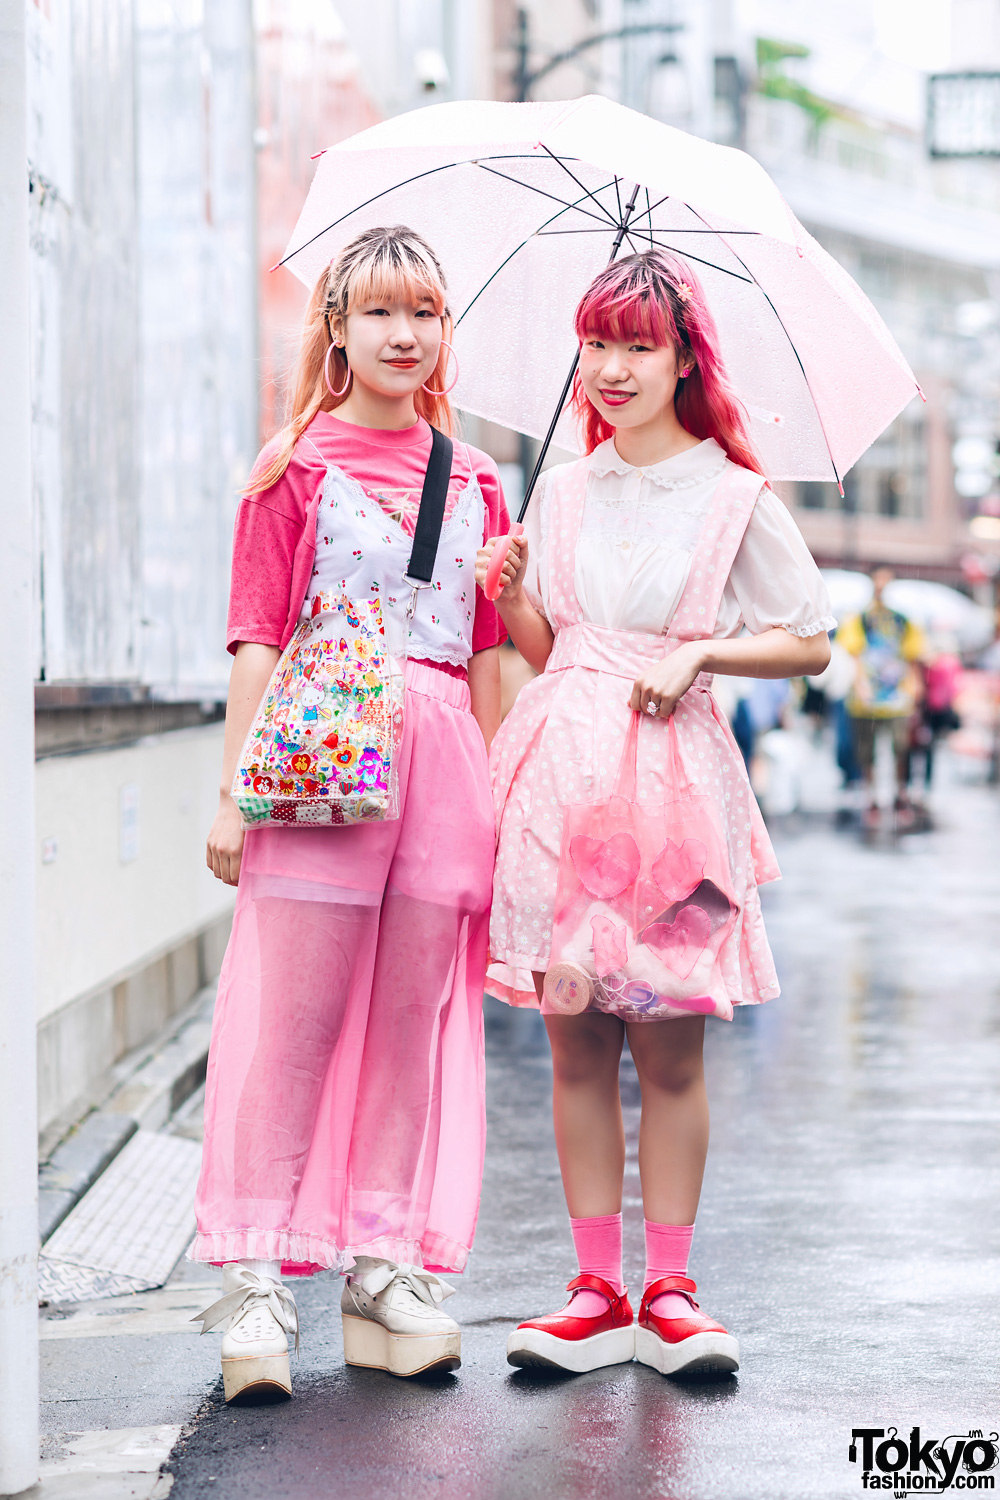 Japanese Harajuku Hippie Denim Pink Purple White Pants SD00681 – SYNDROME -  Cute Kawaii Harajuku Street Fashion Store